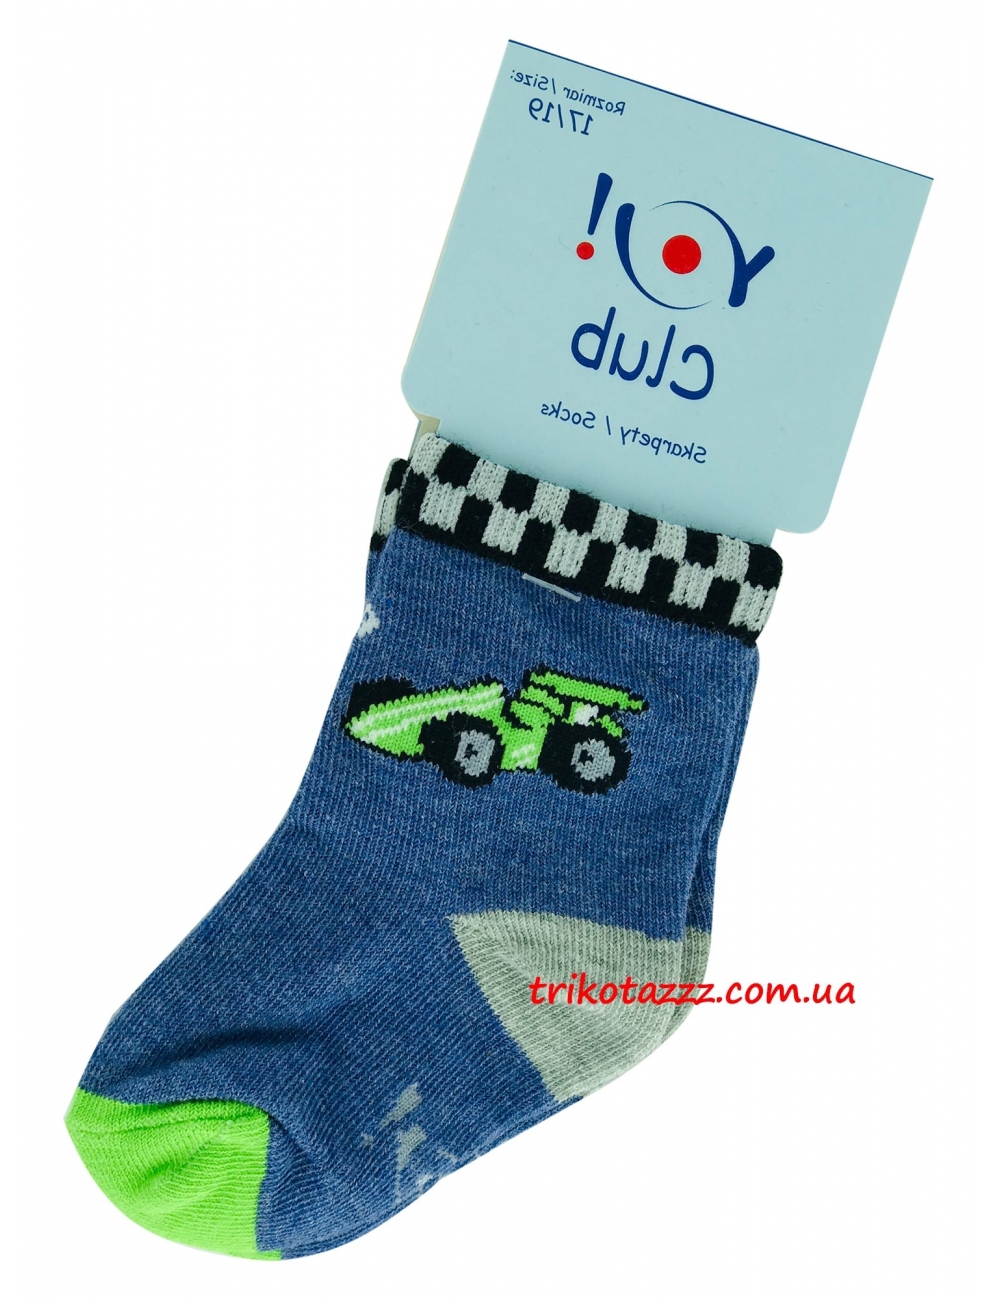 Носки для мальчиков тм" Yo "Машинки на синем